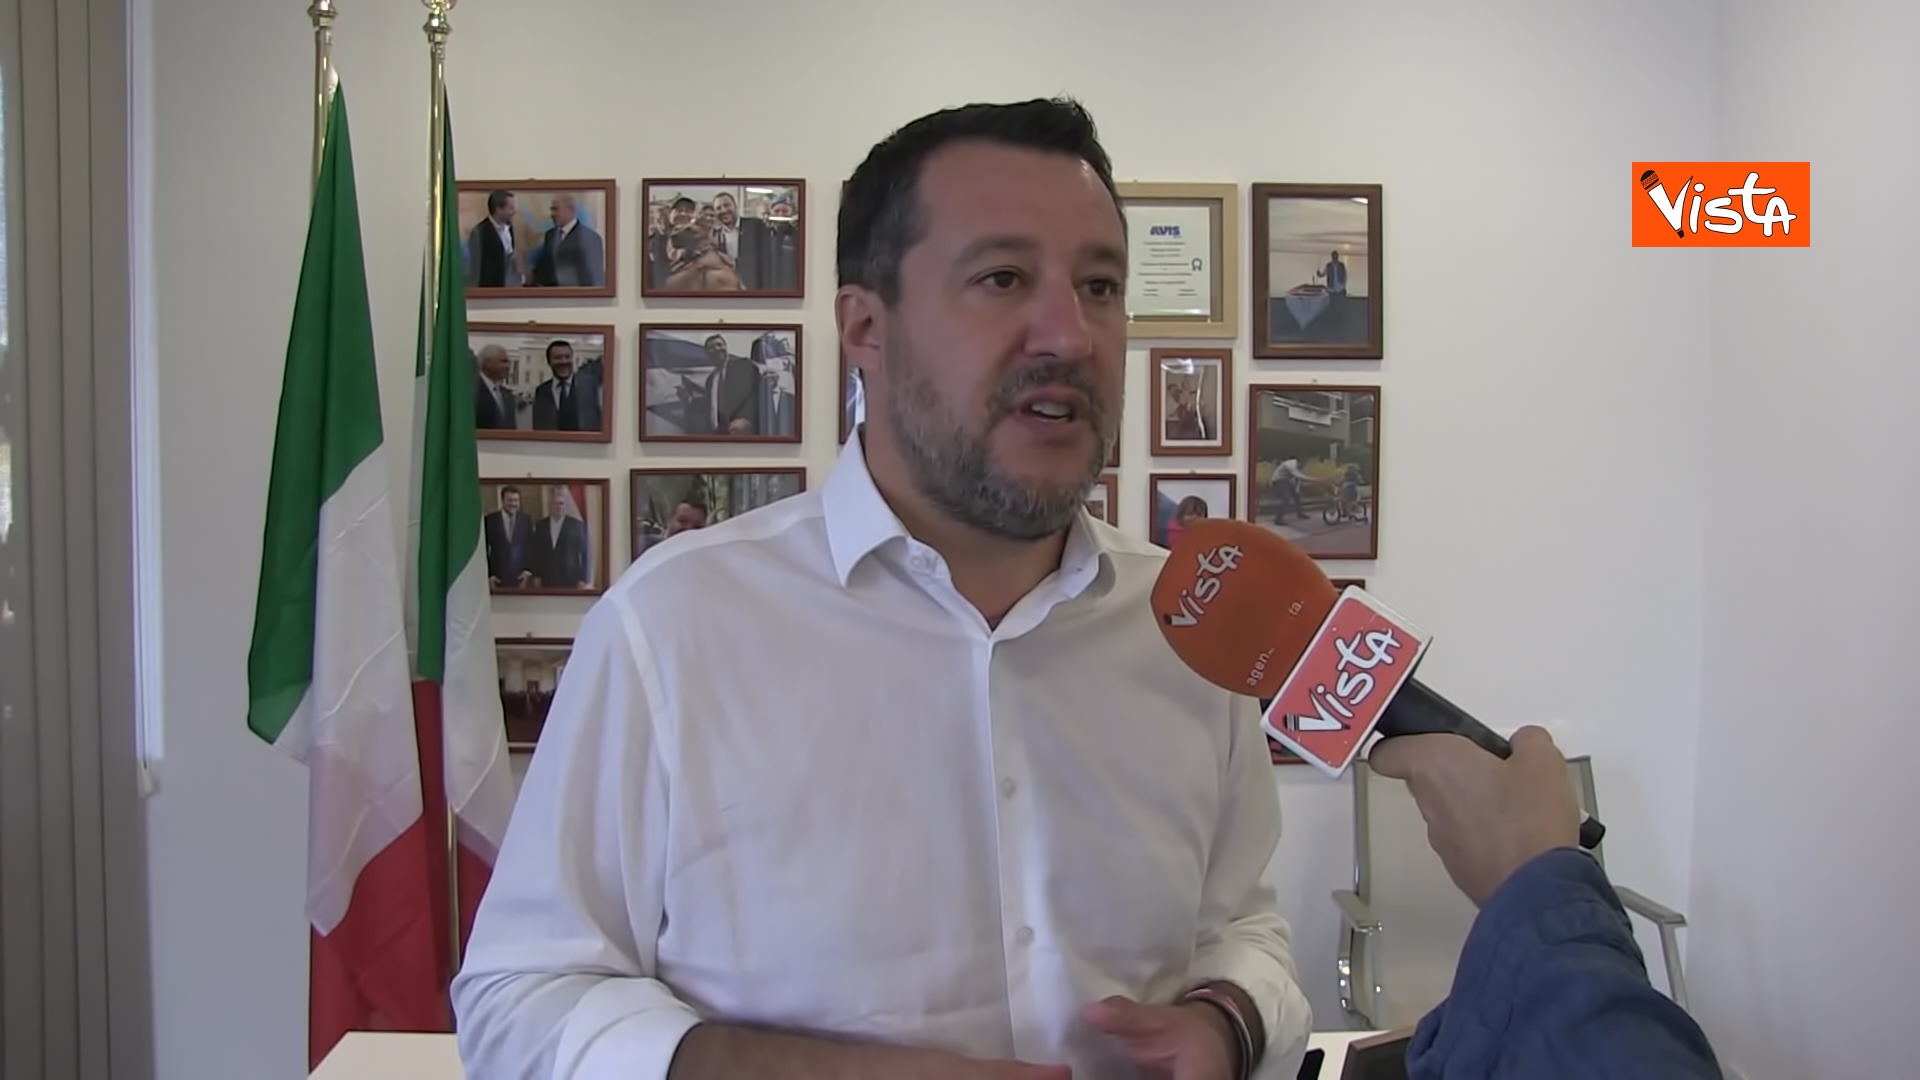 L'intervista a Matteo Salvini del direttore di Vista Jakhnagiev